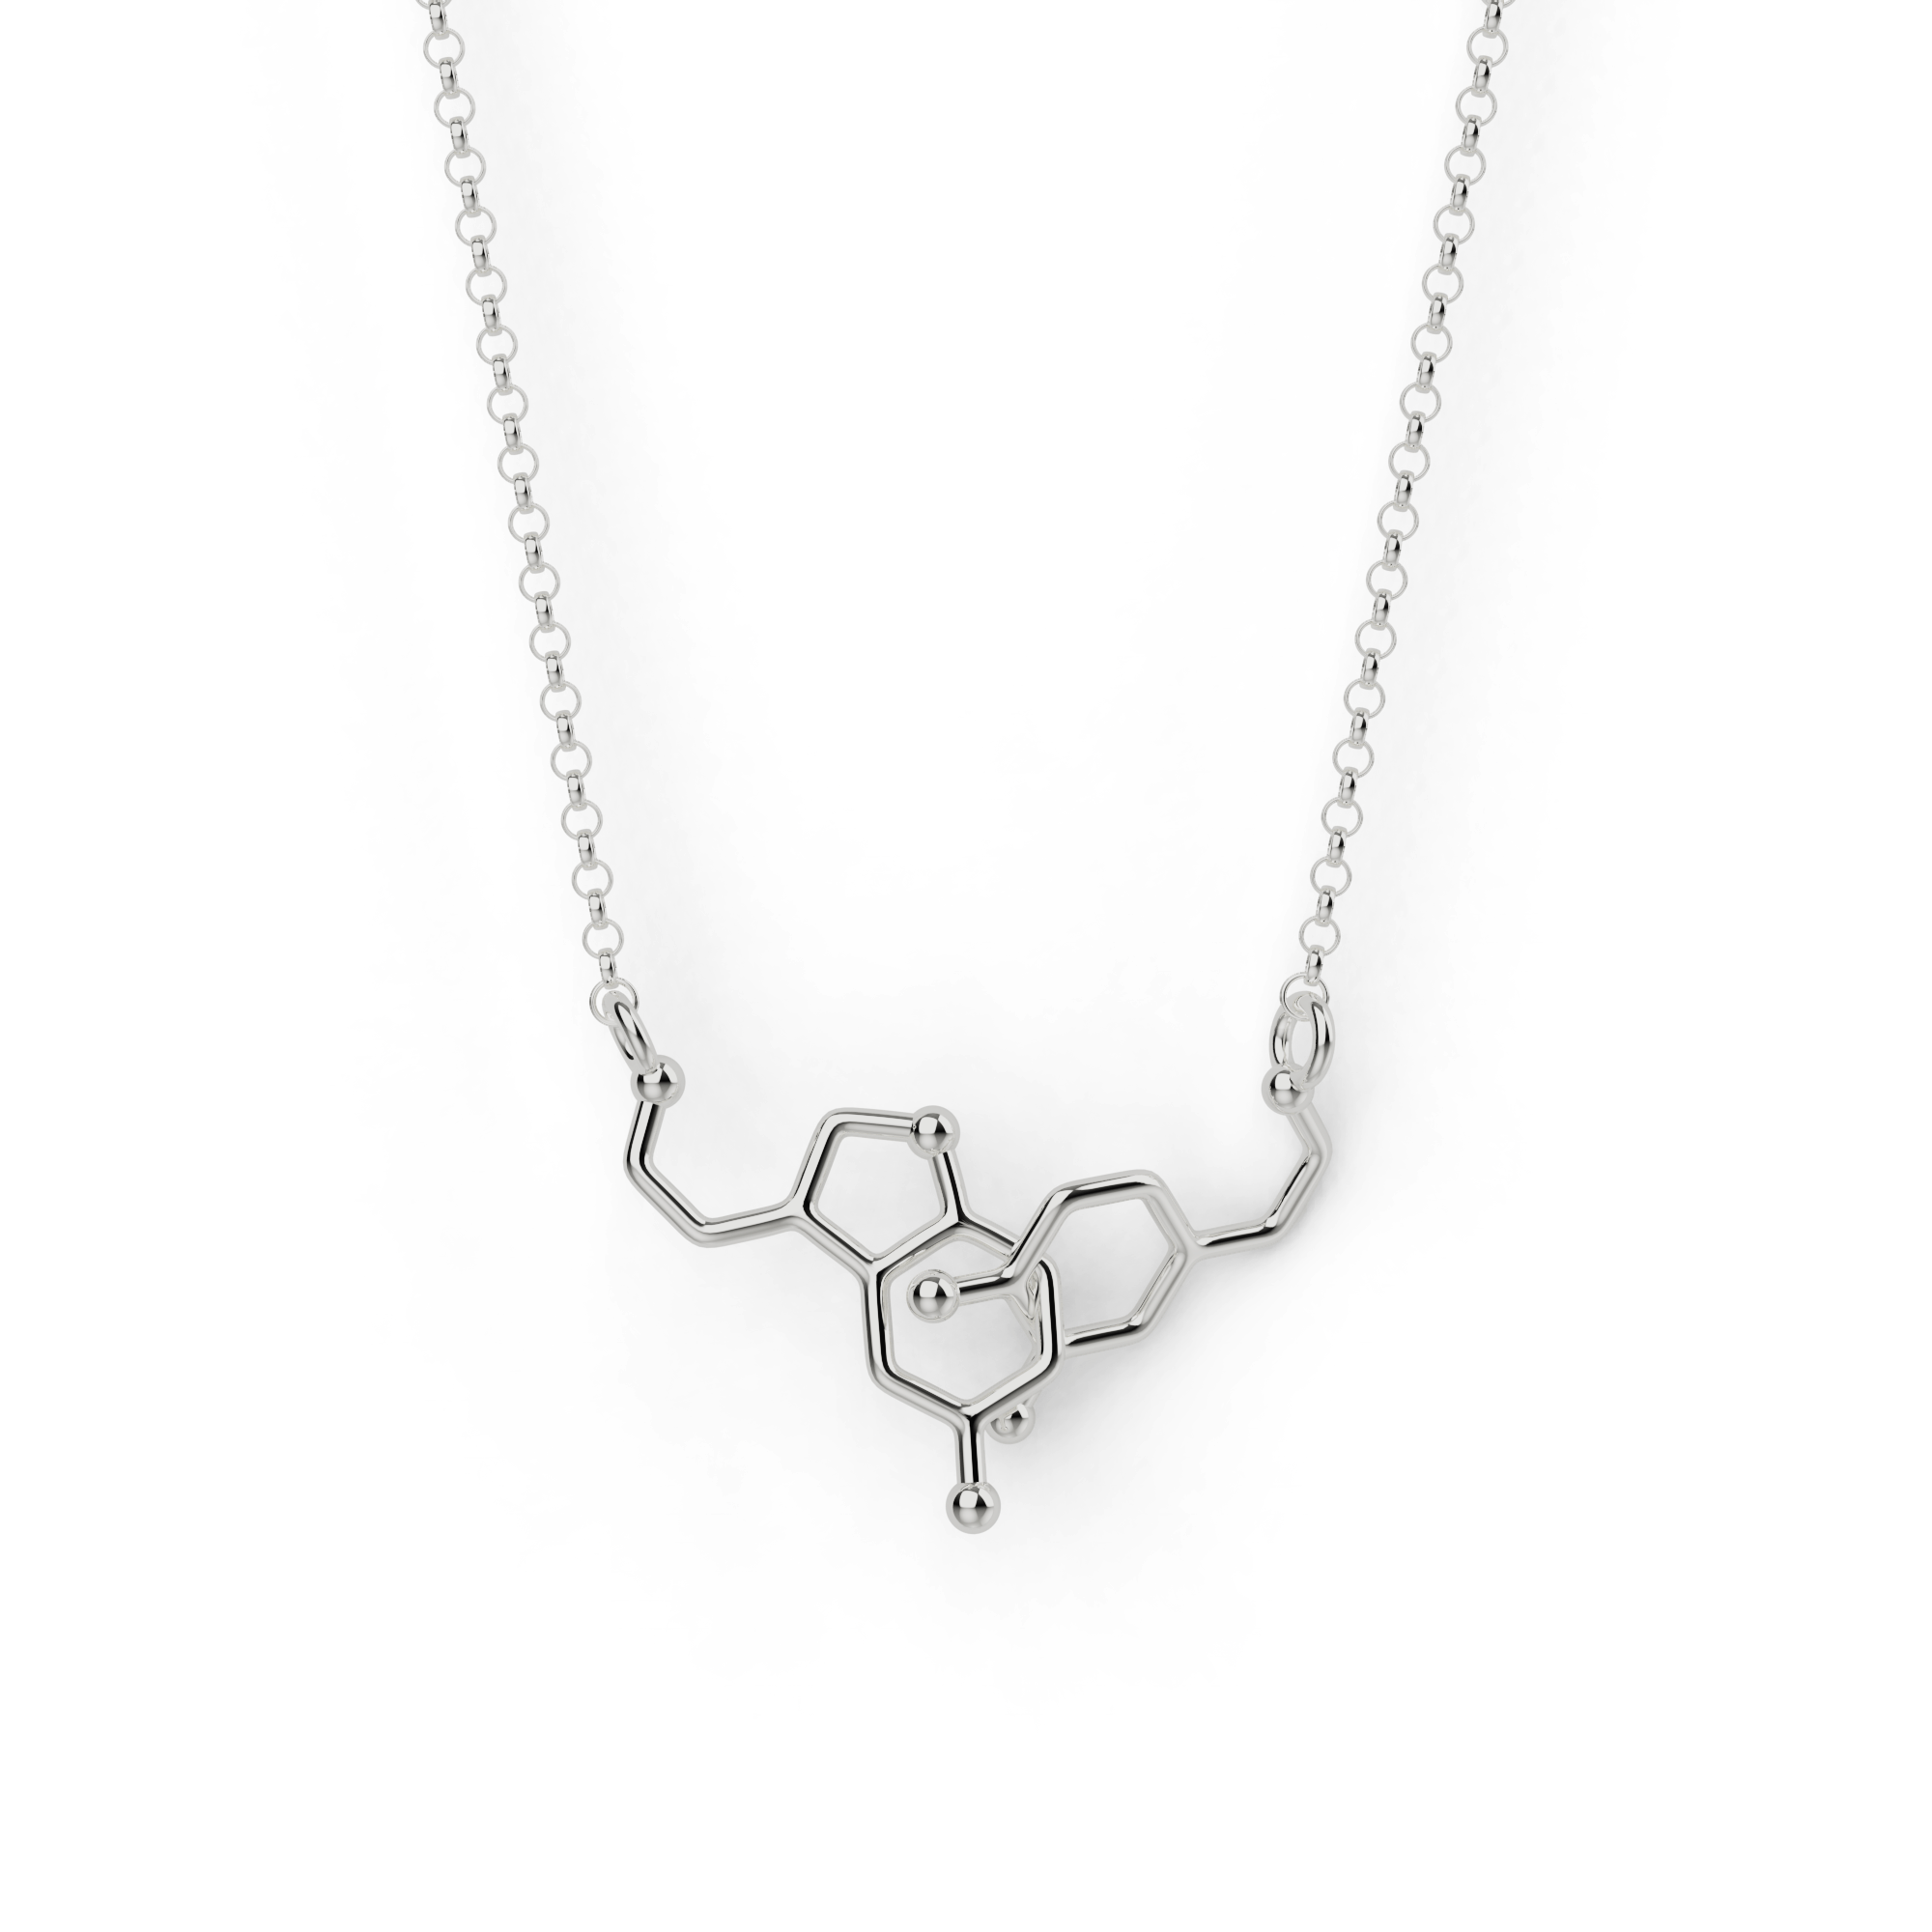 dopamine serotonin necklace h silver necklaces science jewelry sciencejewelry1824 51377600233820